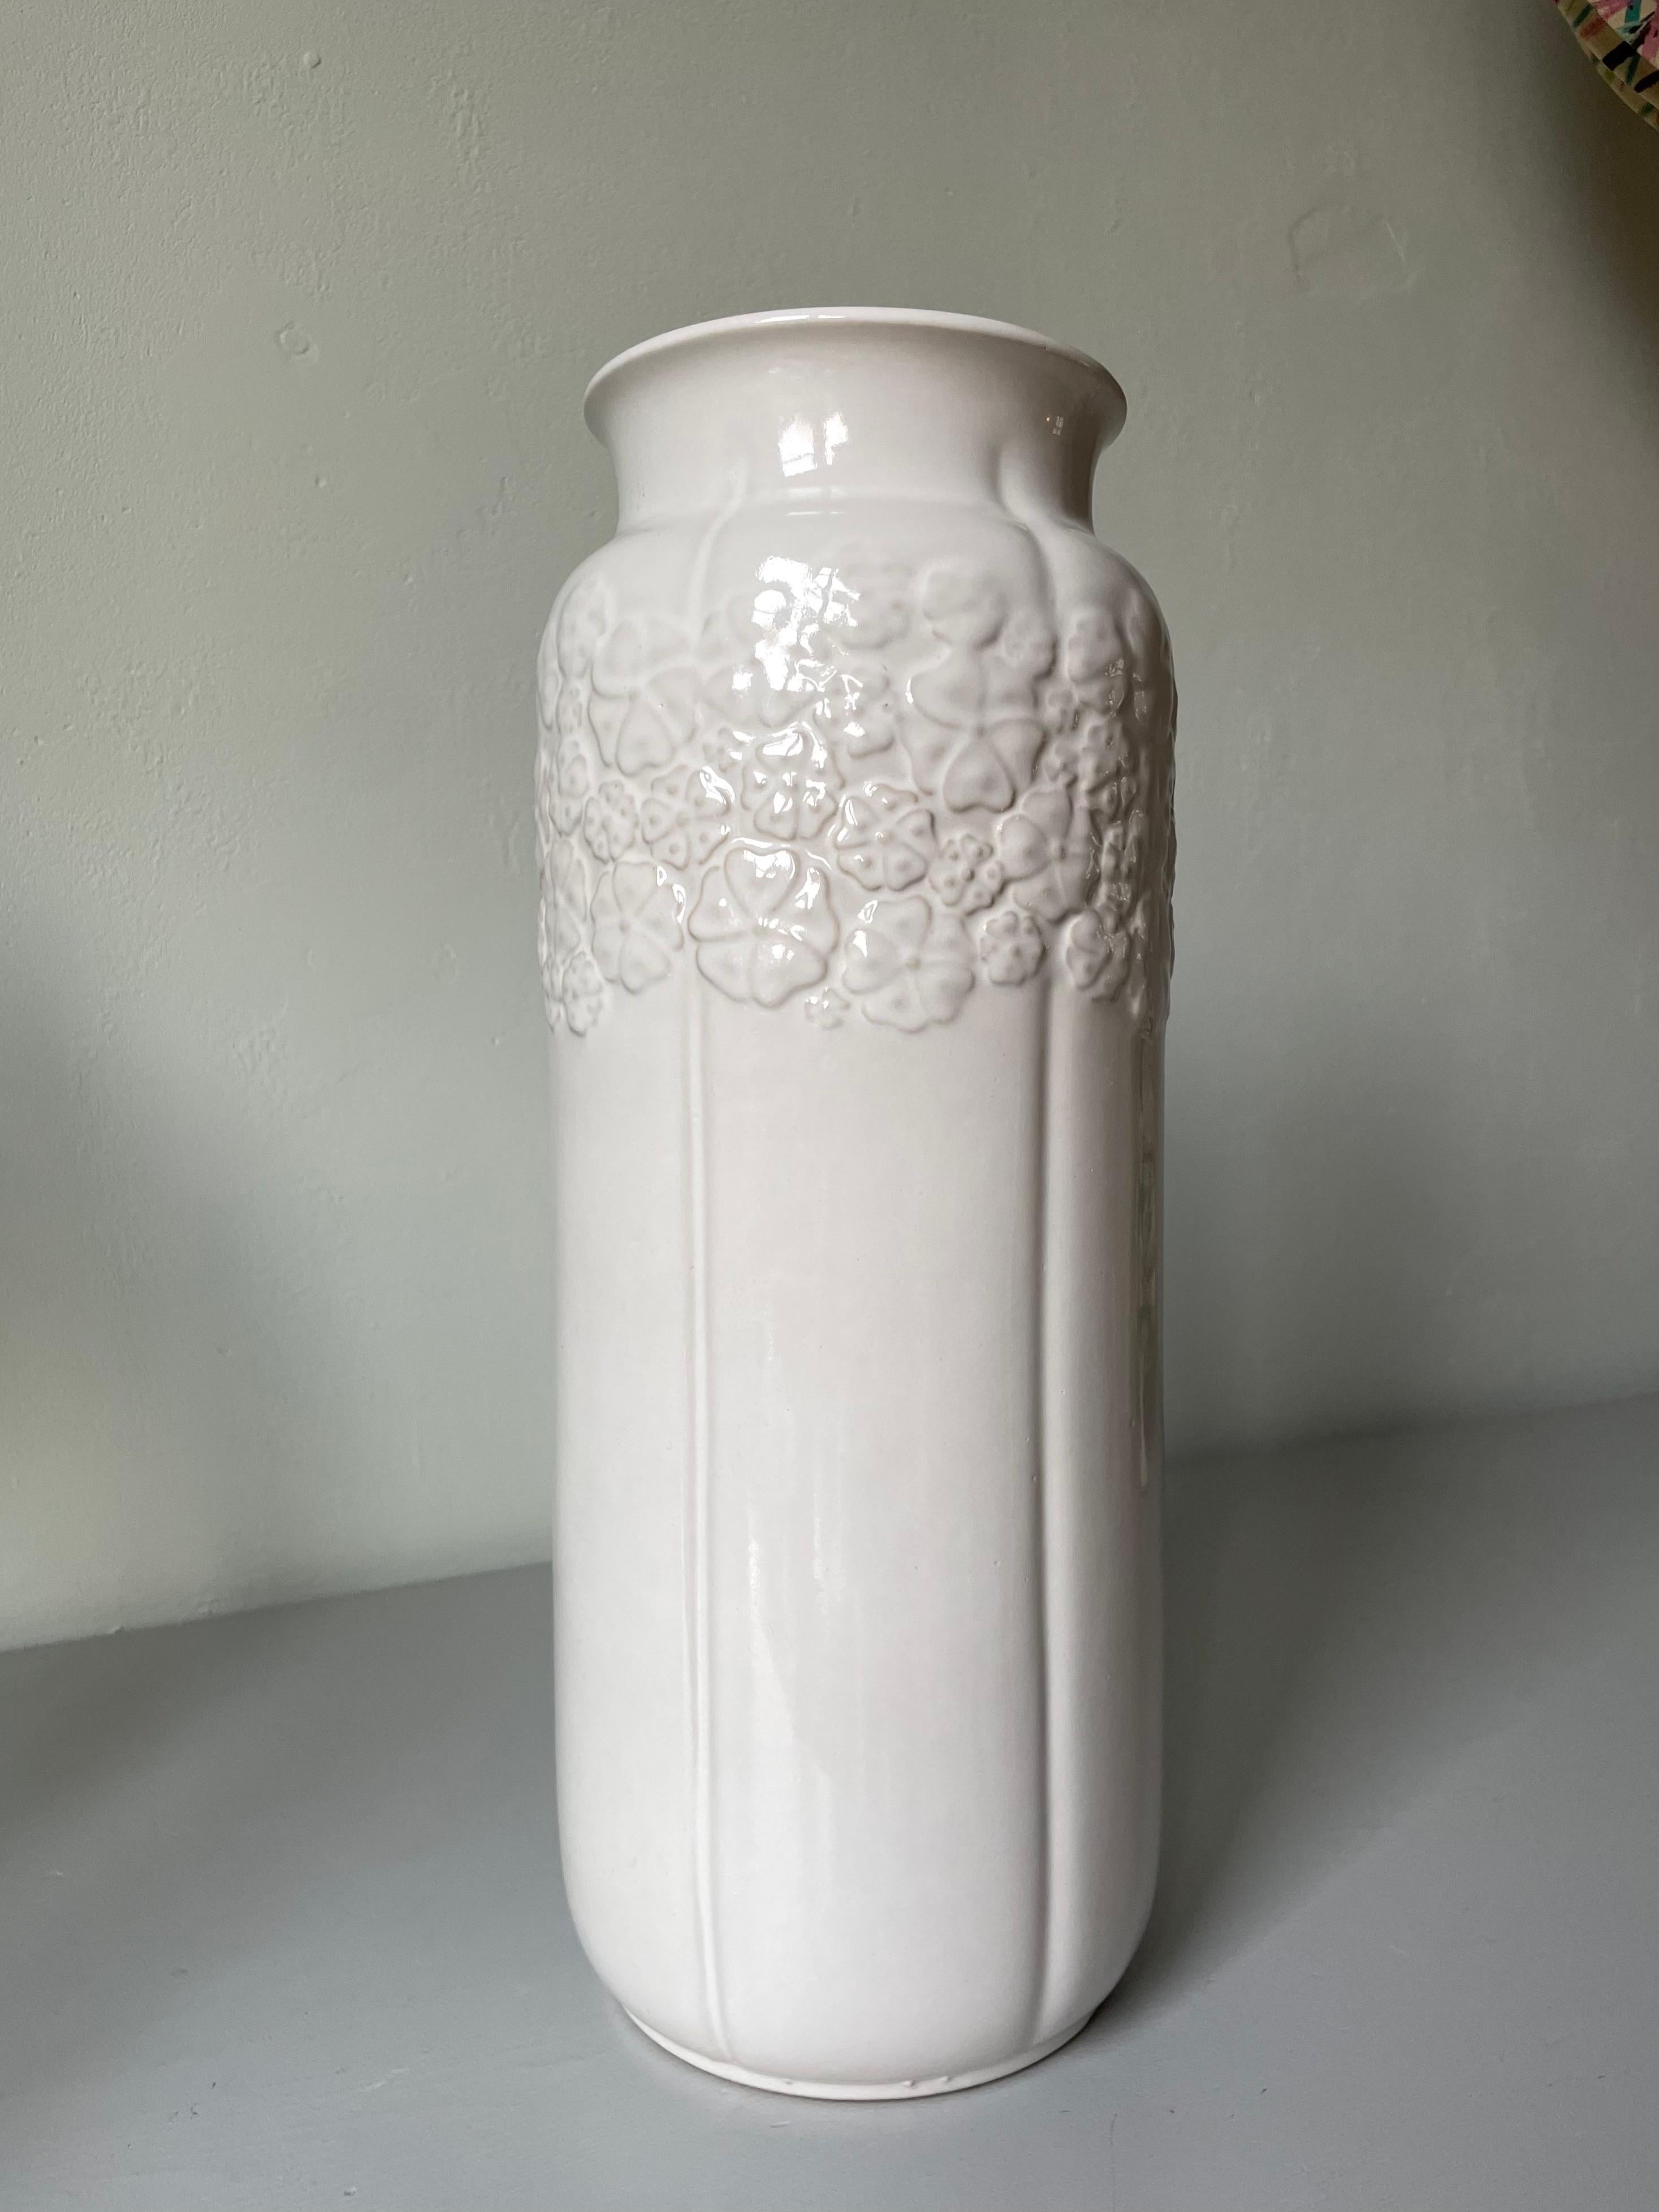 Ceramic Bay Keramik Tall White Modernist Floor Vase With Organic Decor, 1970s For Sale